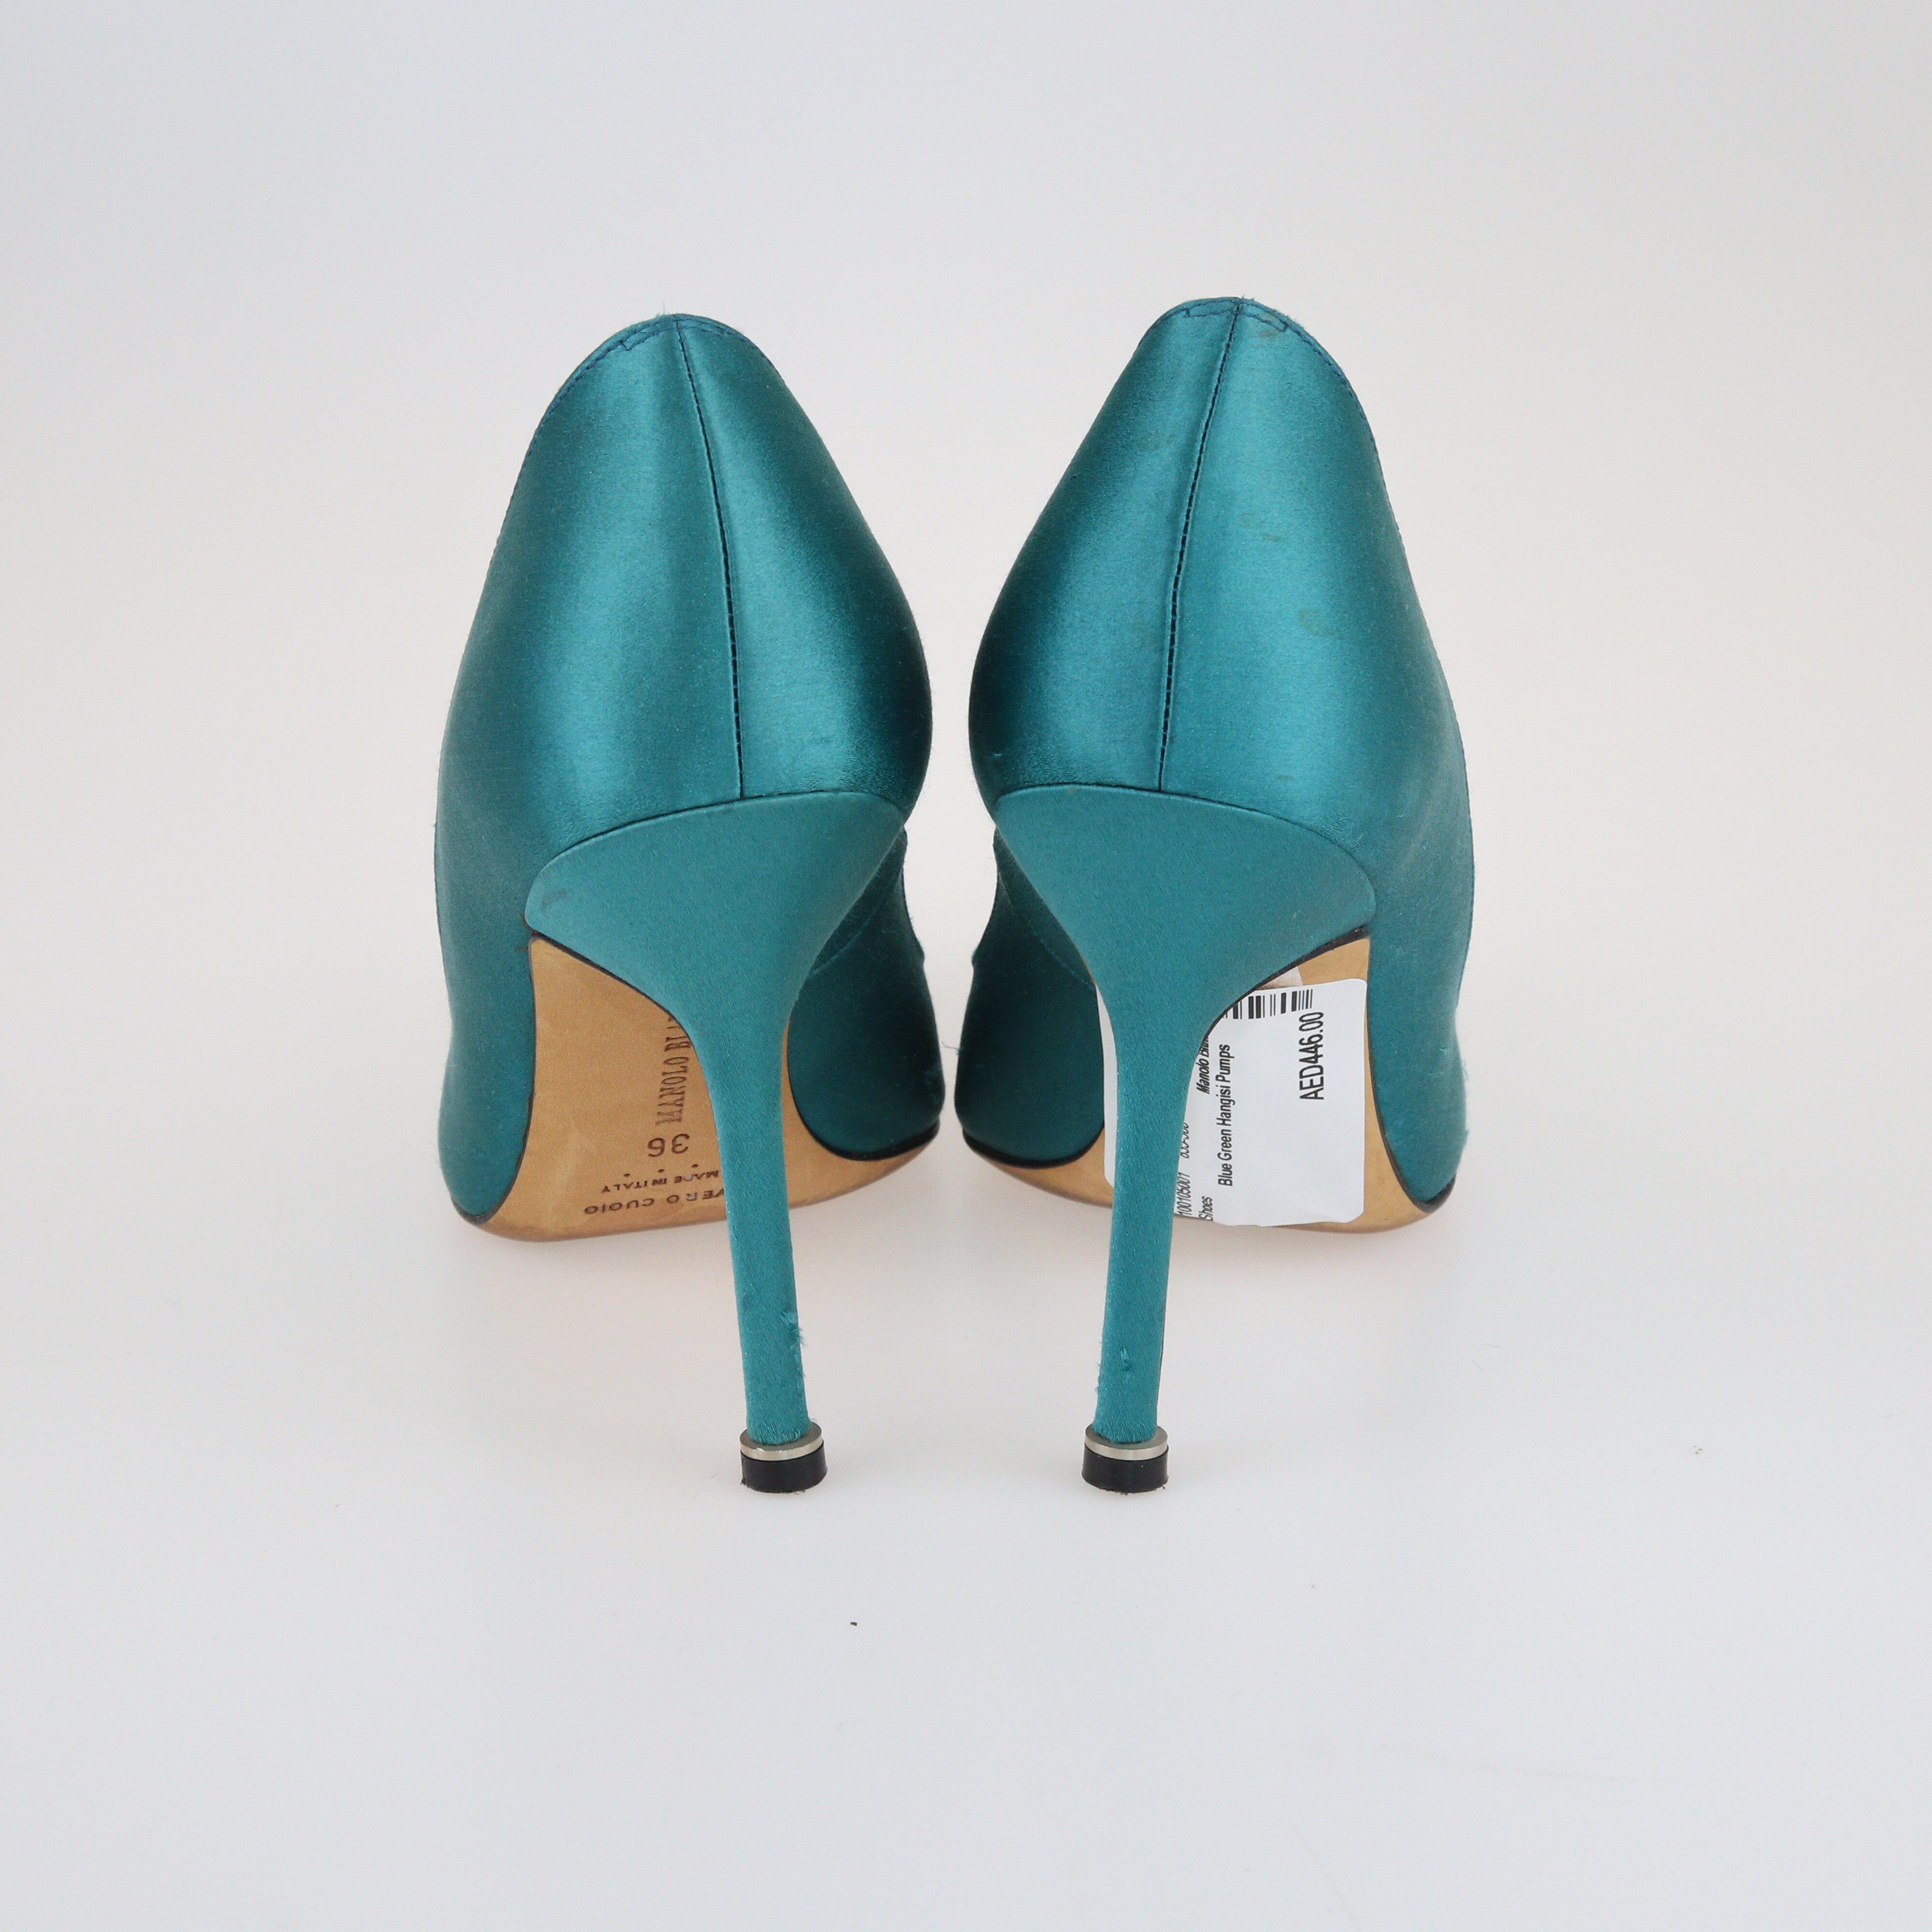 Turquoise Hangisi Pumps Shoes Manolo Blahnik 